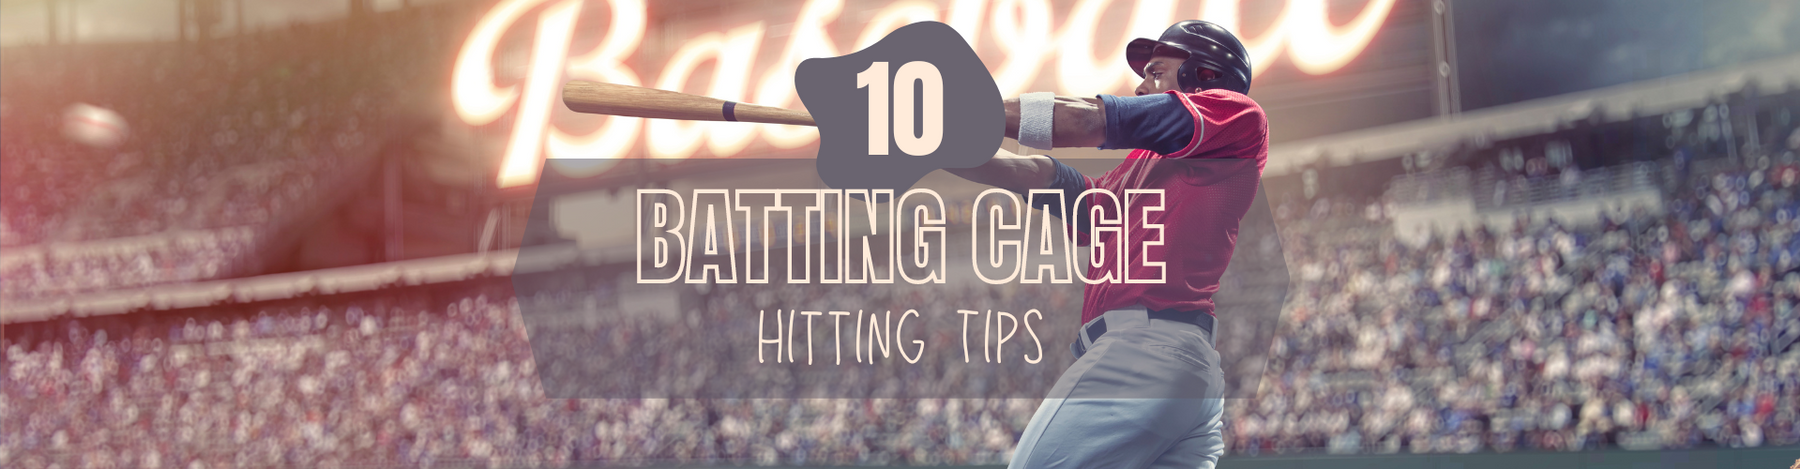 Top 10 Batting Cage Hitting Tips